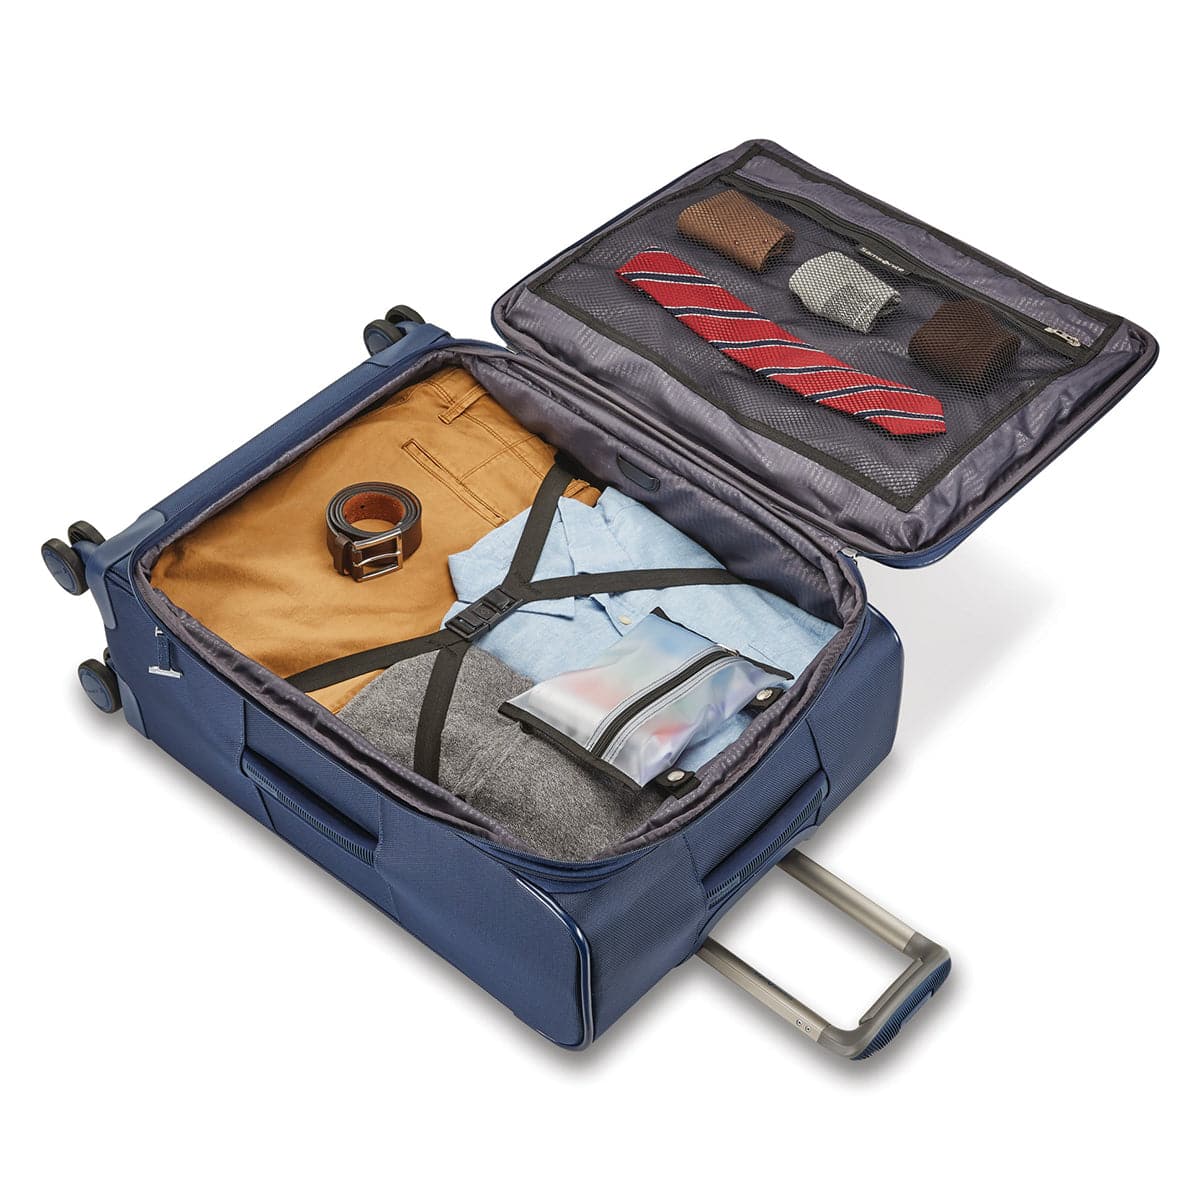 Samsonite Insignis Softside 25" Spinner Carry-On Luggage